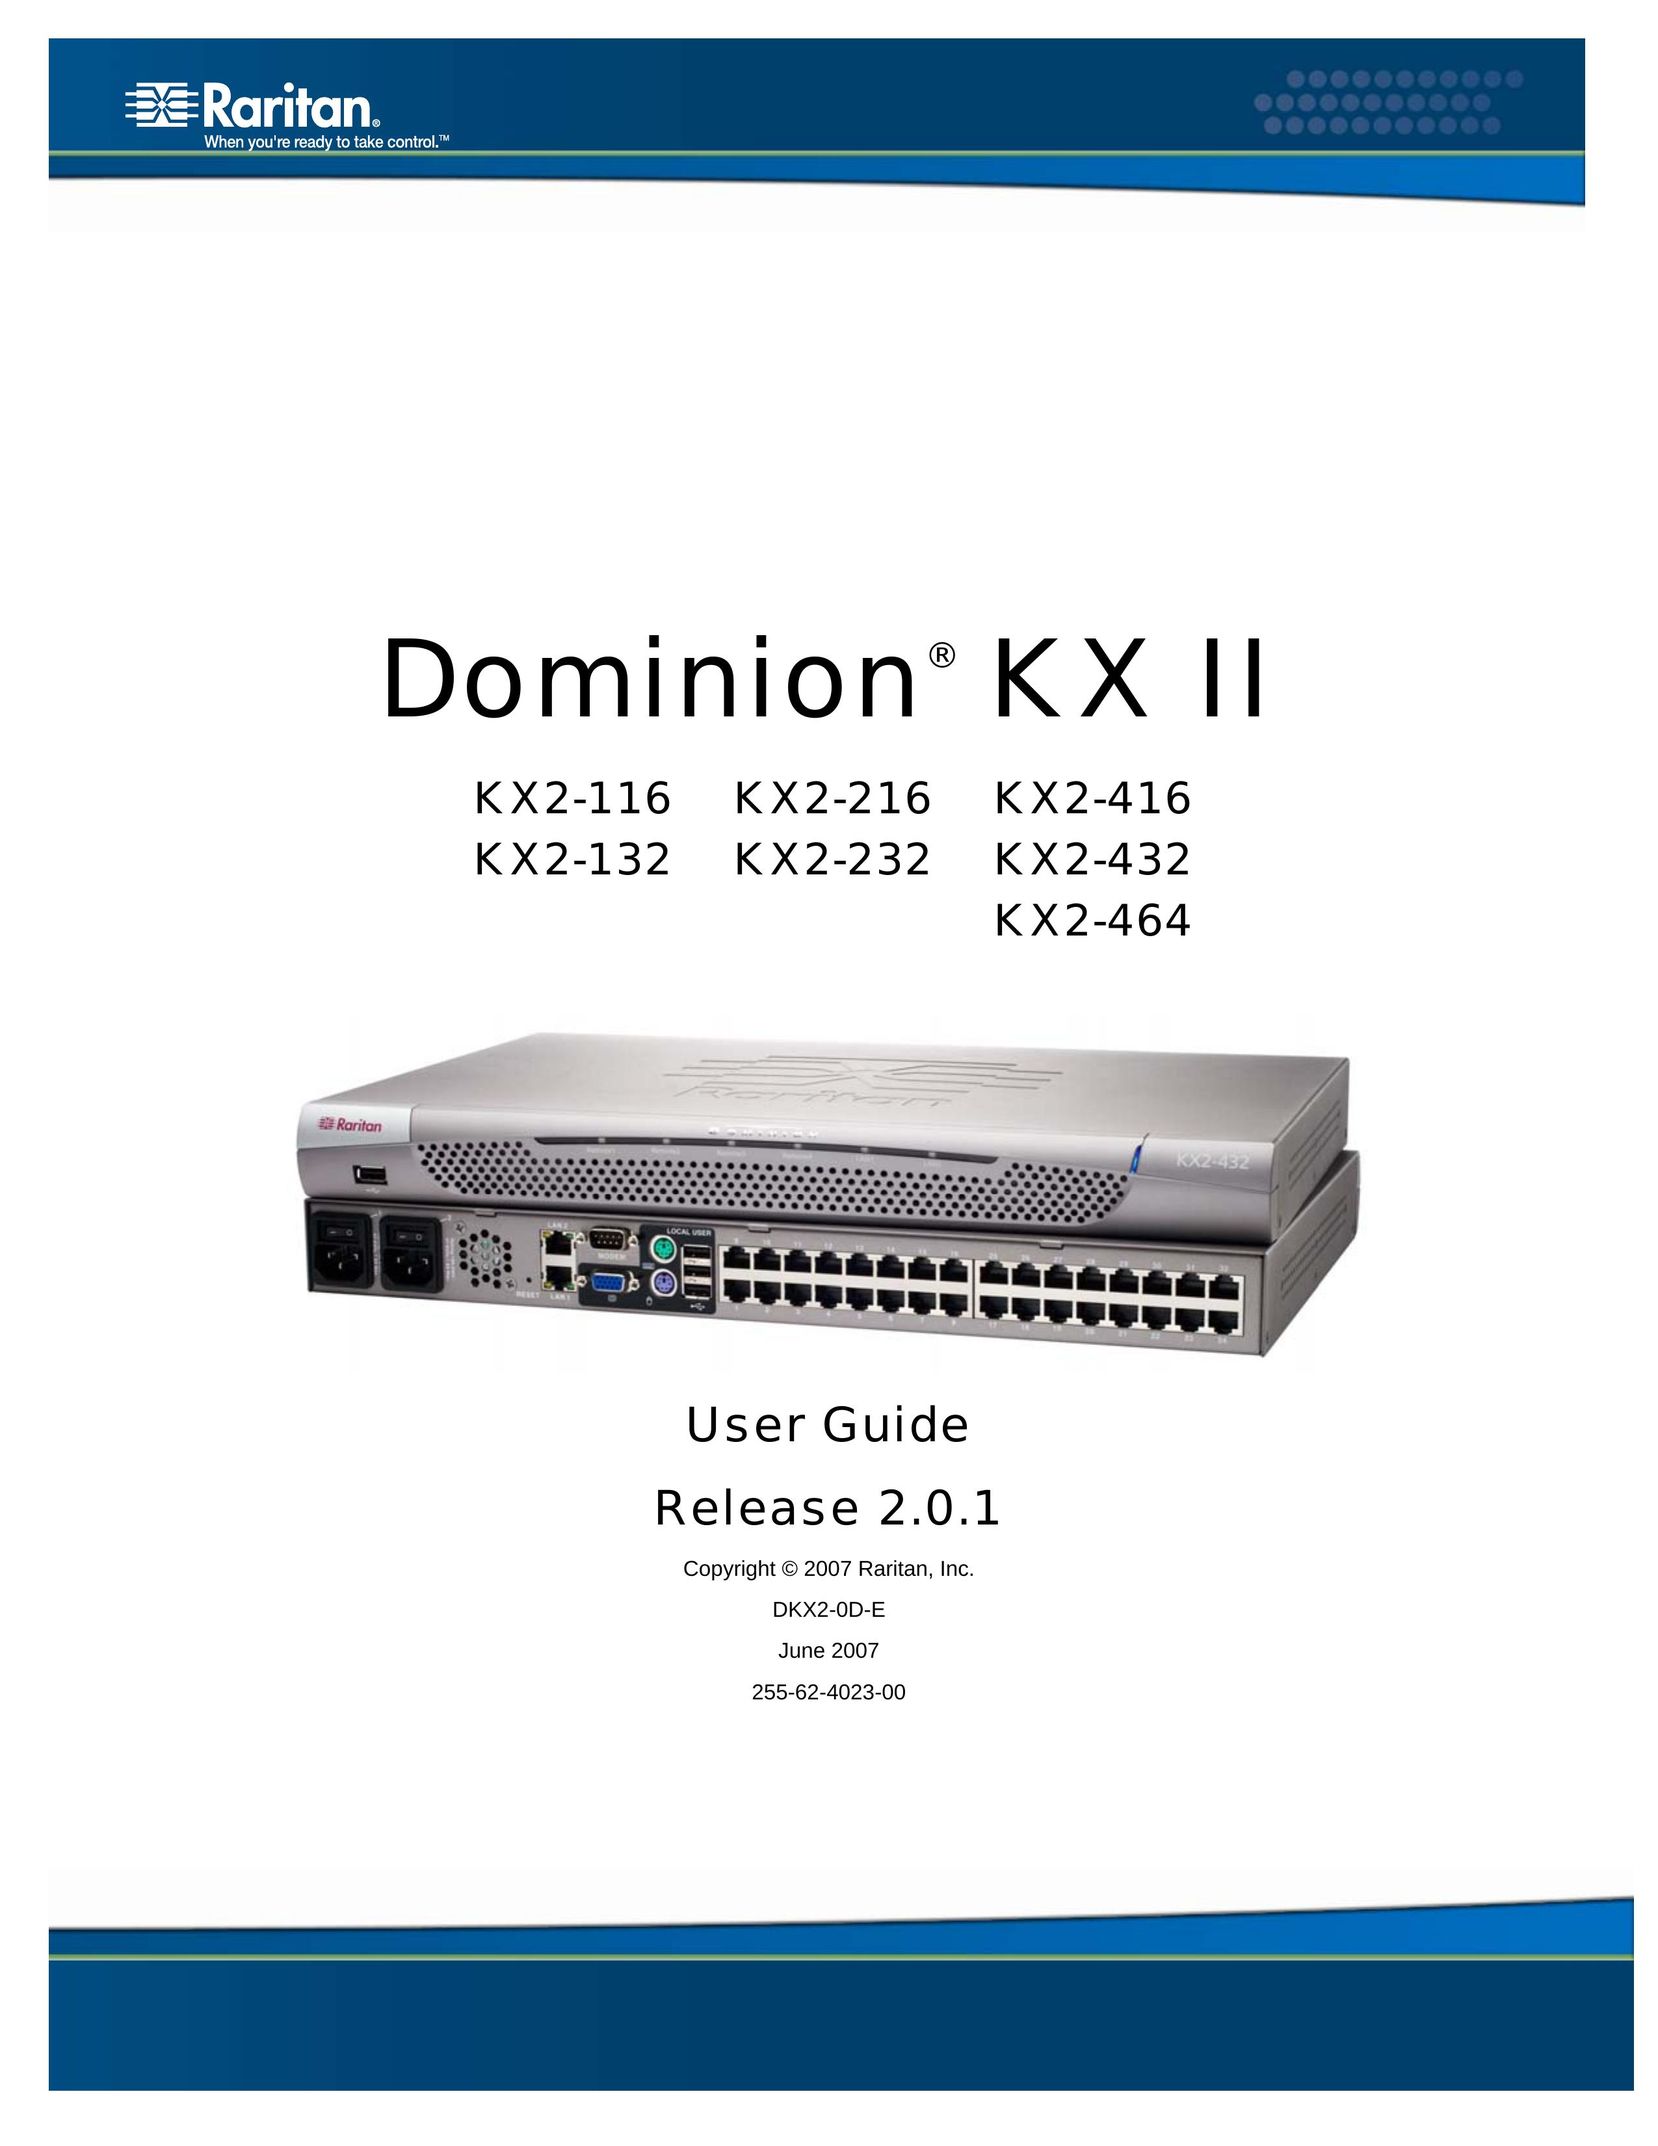 Raritan Computer KX2-432 Network Router User Manual